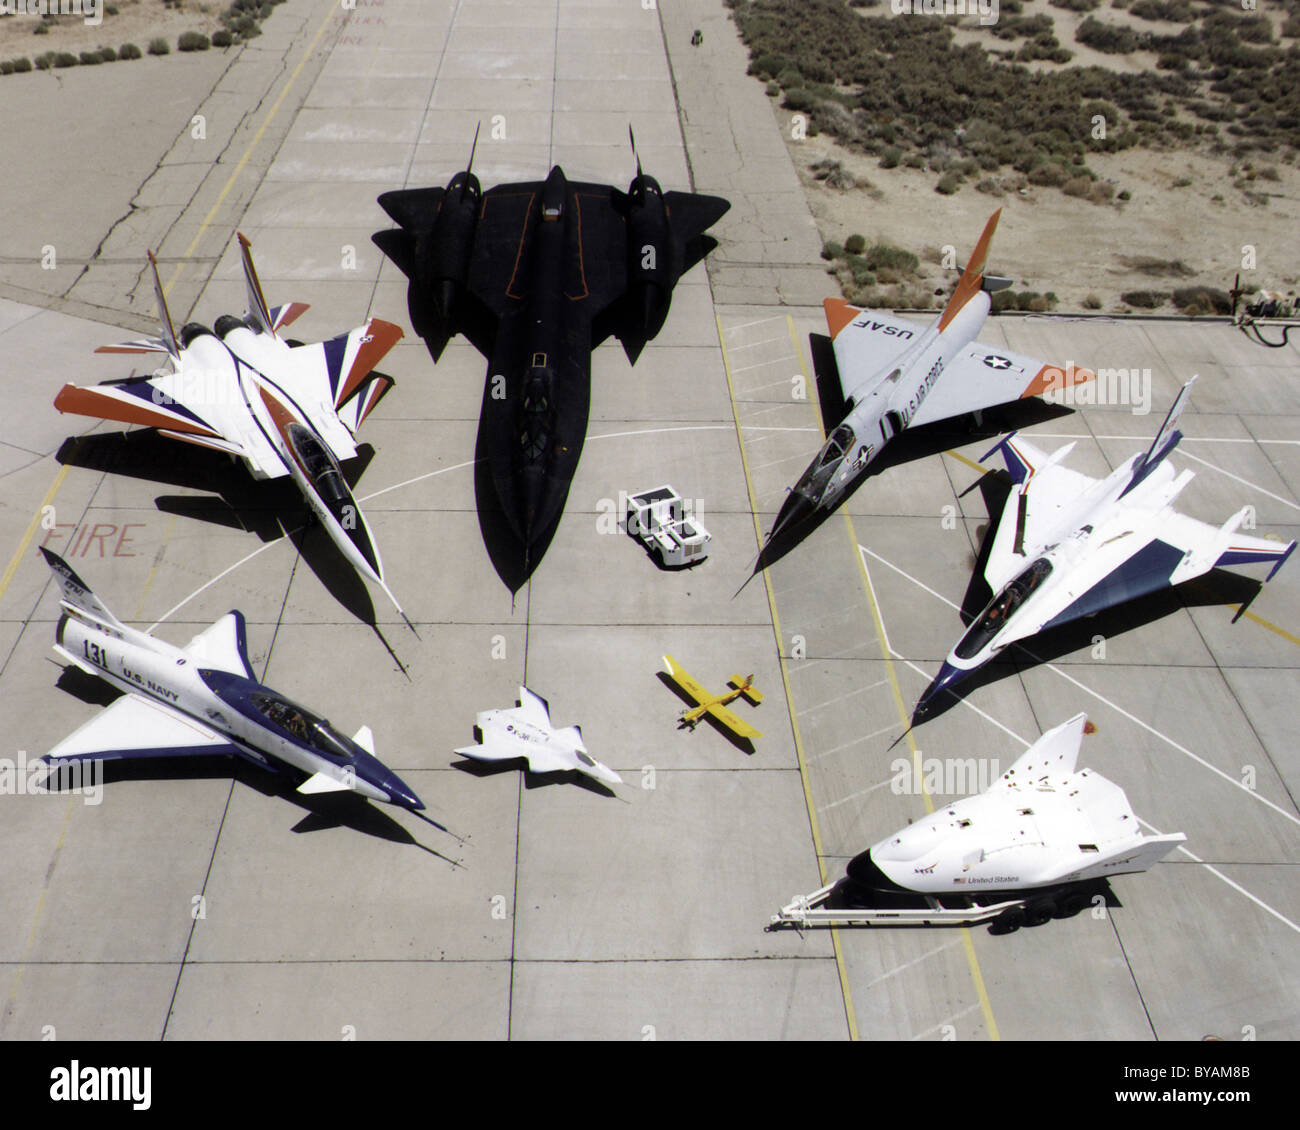 NASA Forschungsflugzeugs, X-31, f-15 ACTIVE, SR-71, F-106, F-16XL Schiff #2, X-38 und X-36. Stockfoto